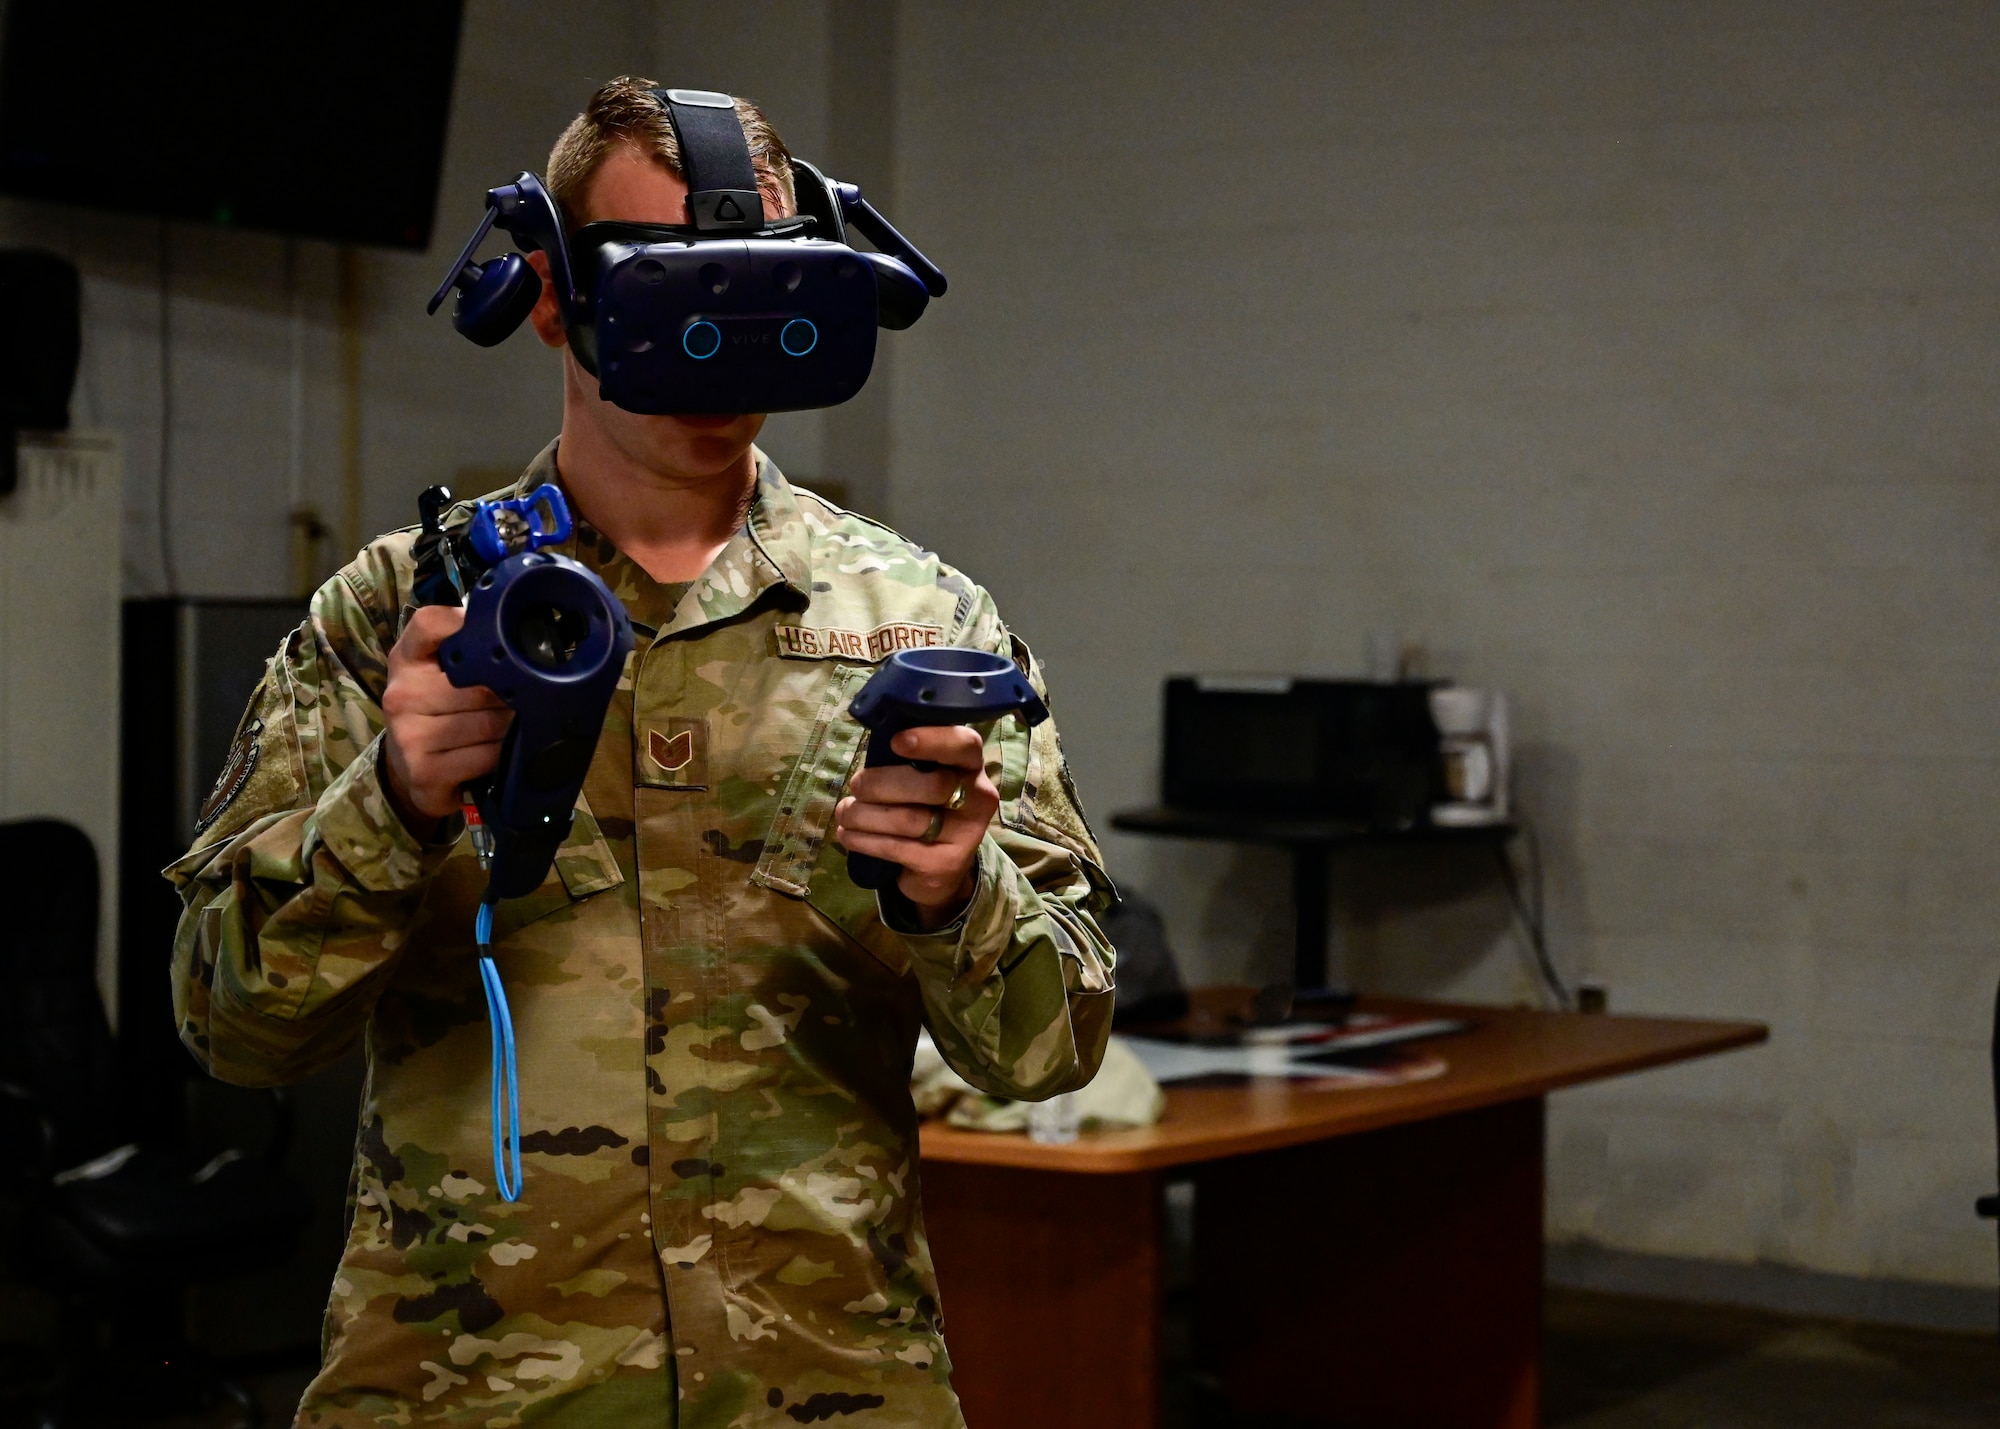 An Airman tests a virtual reality headset.